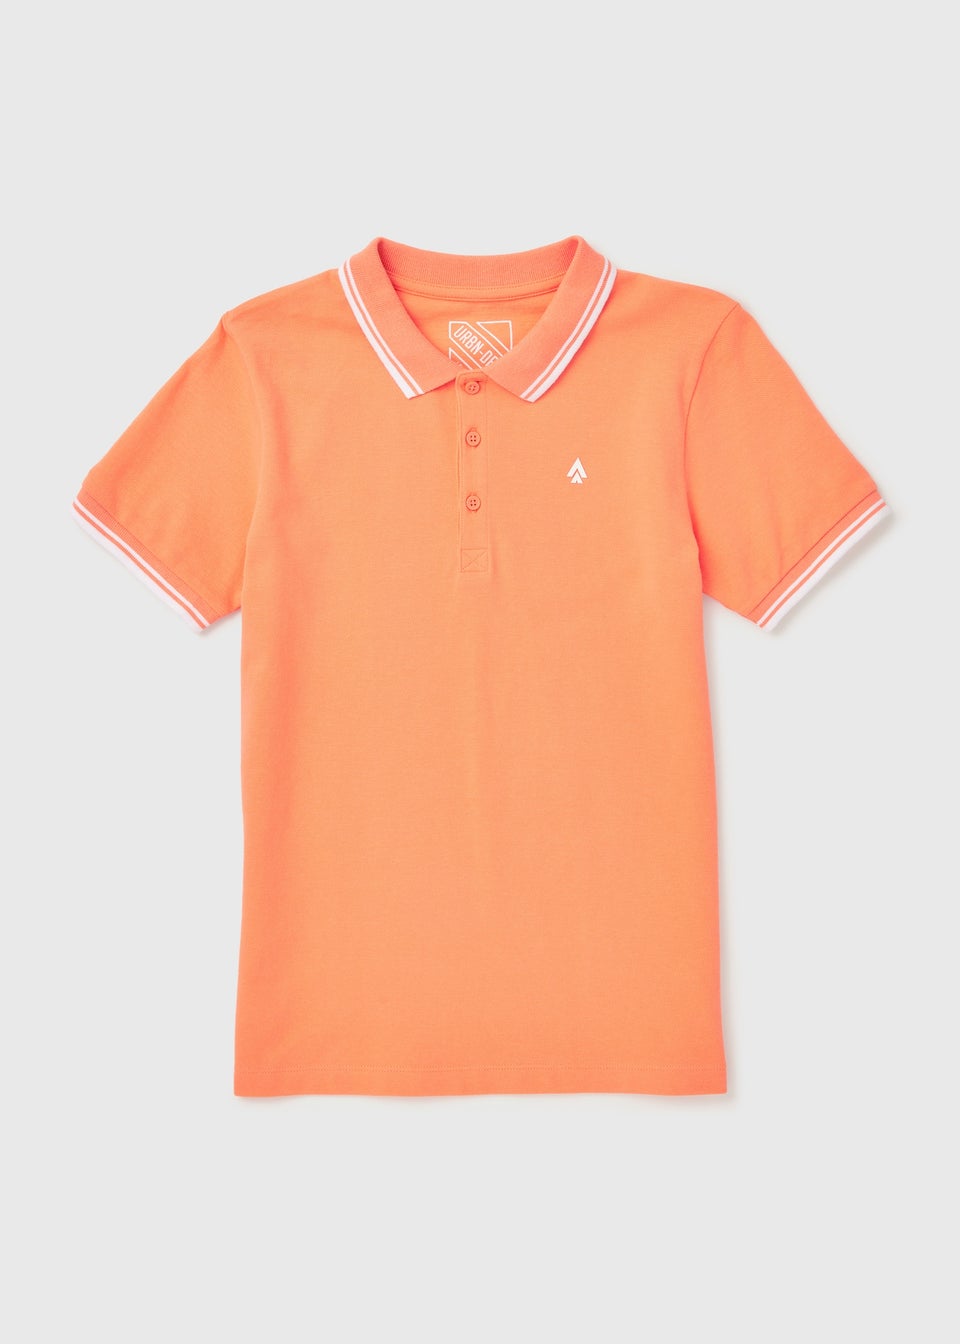 Boys Orange Polo Shirt (7-13yrs)